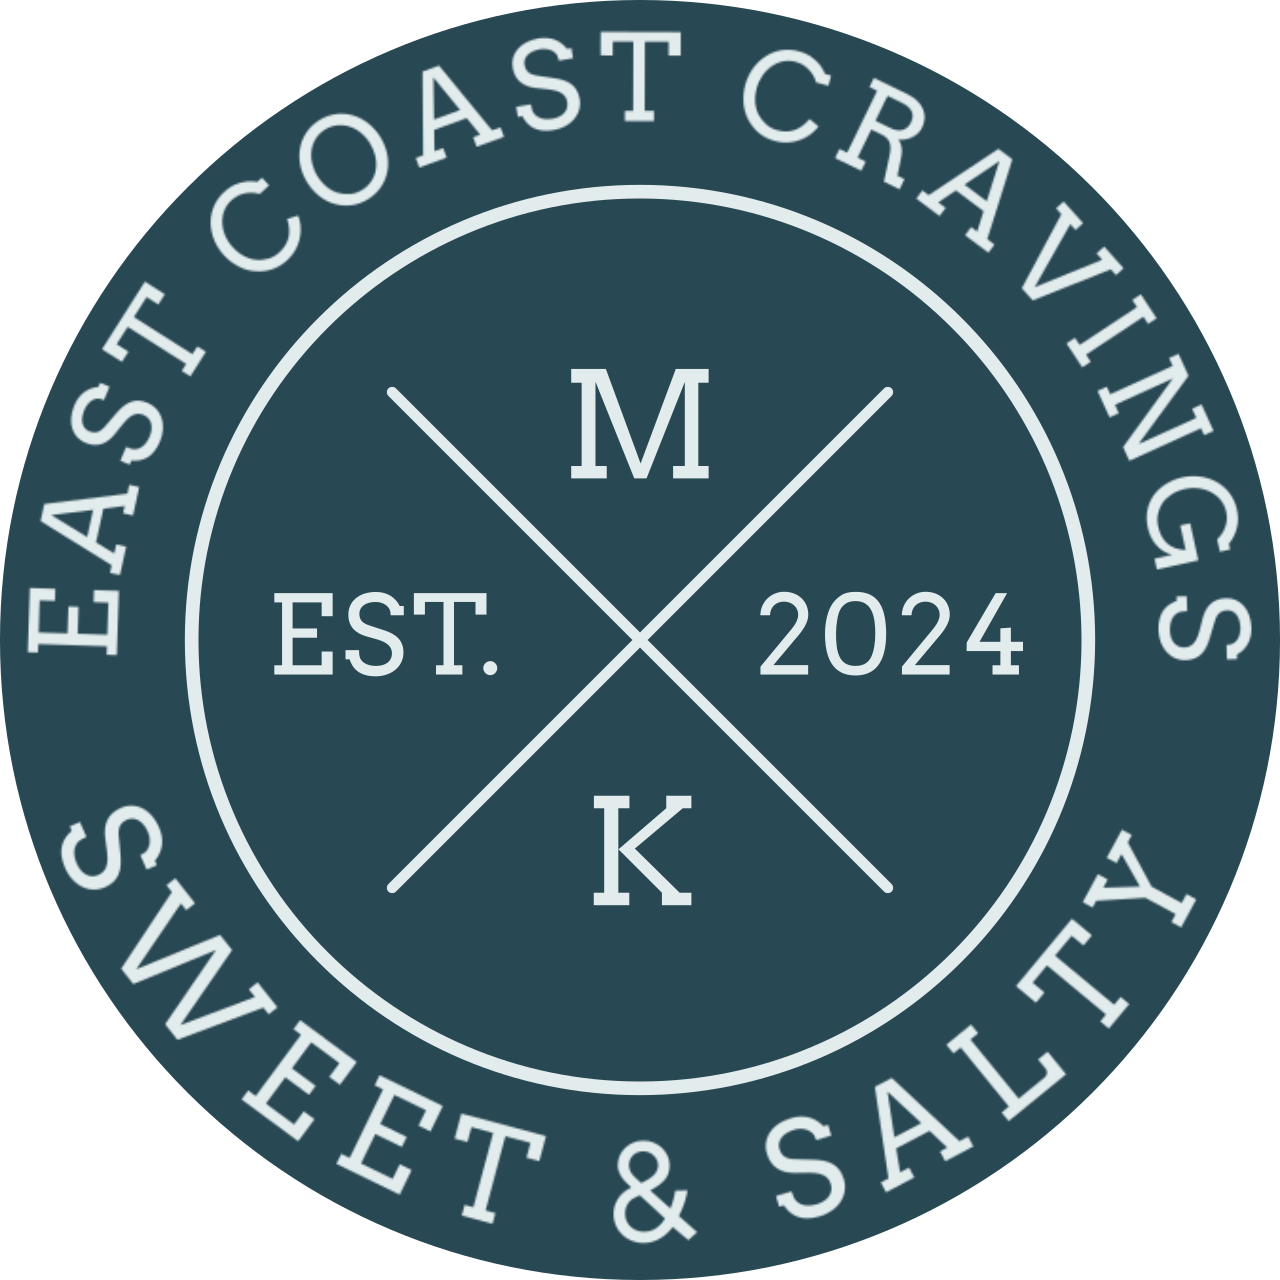 EAST COAST CRAVINGS's logo